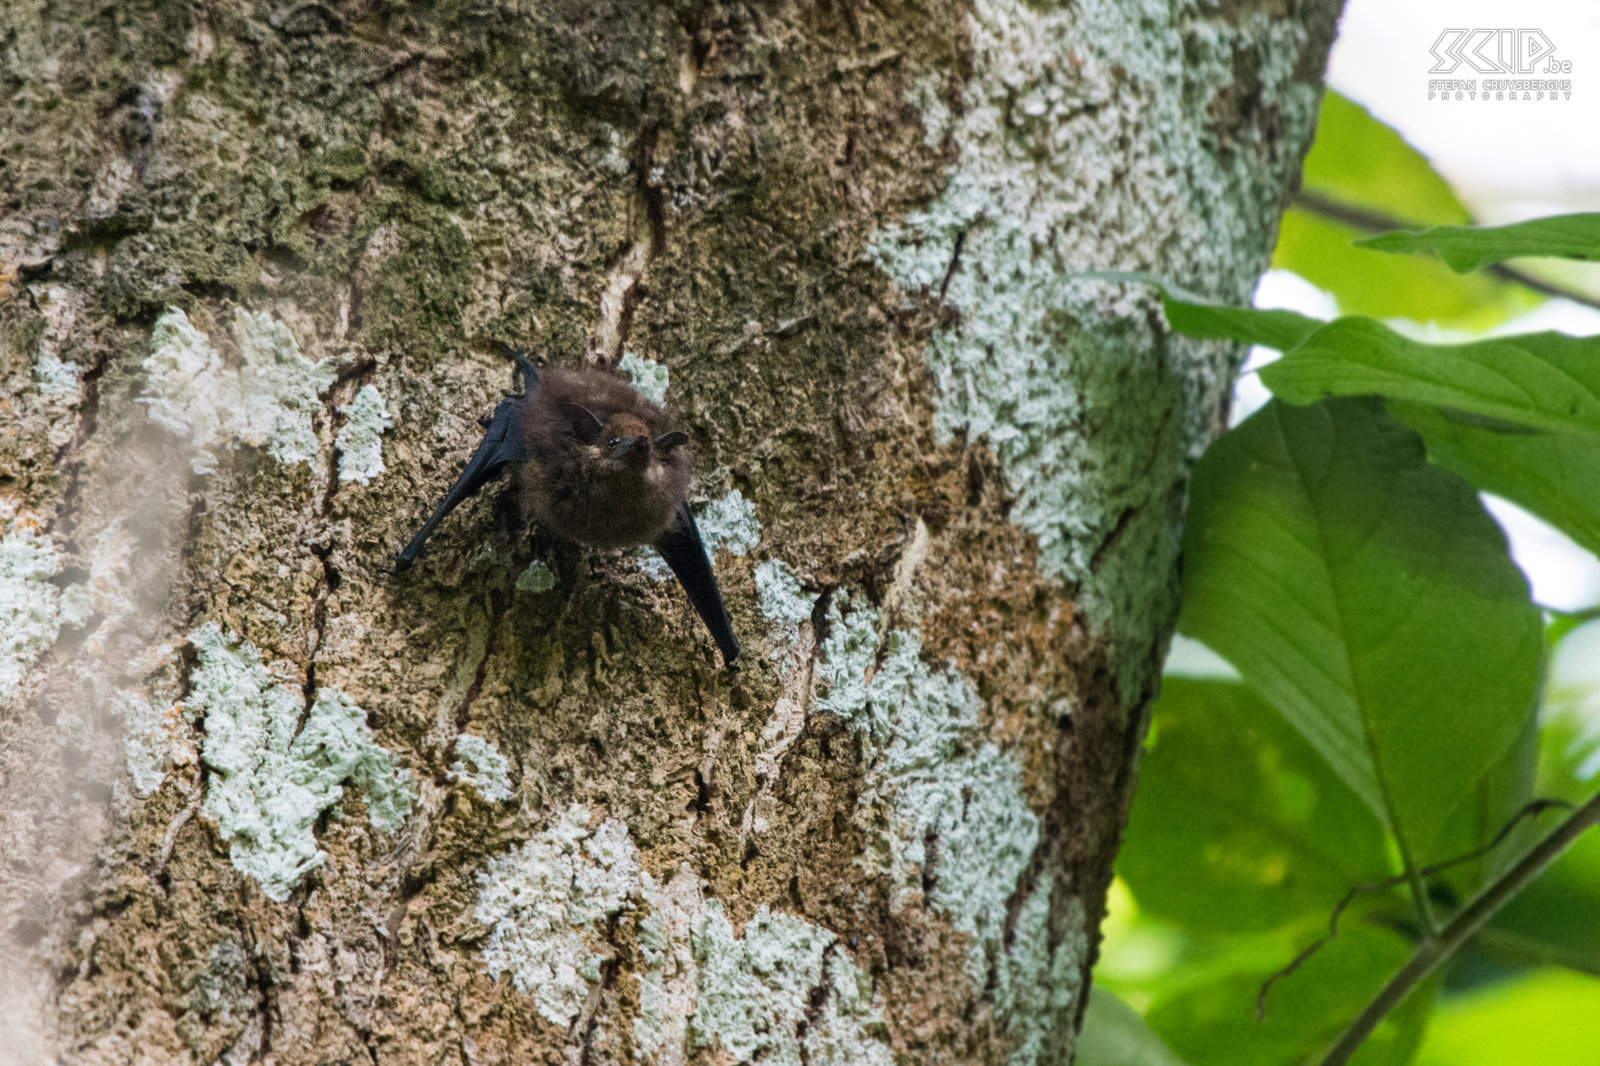 Carara - Schedestaartvleermuis Een slapende schedestaartvleermuis (sac-winged bat) tegen een boom in Carara NP. Stefan Cruysberghs